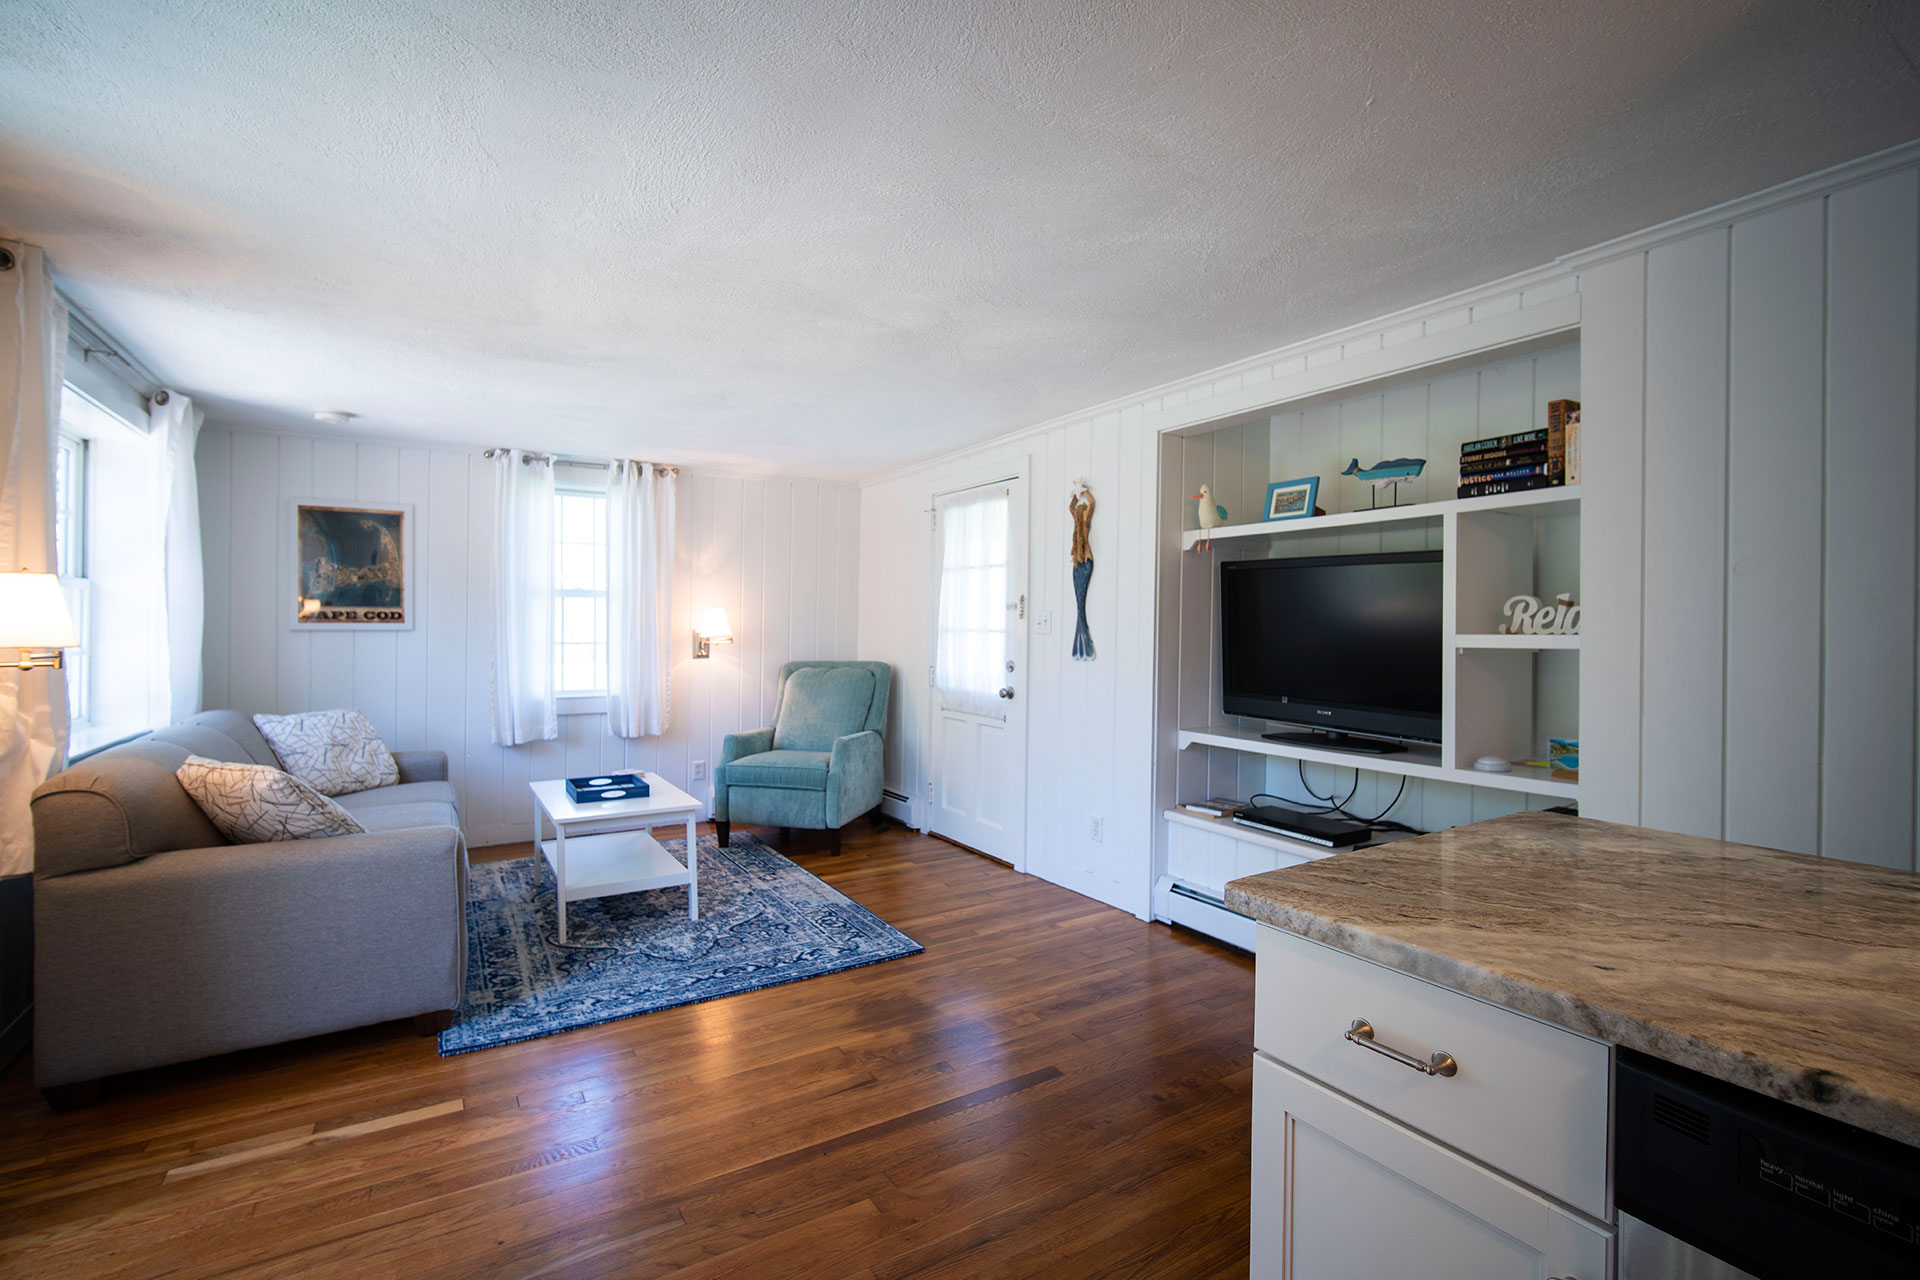 1 Bedroom Cottage Rental Cape Cod Living Area